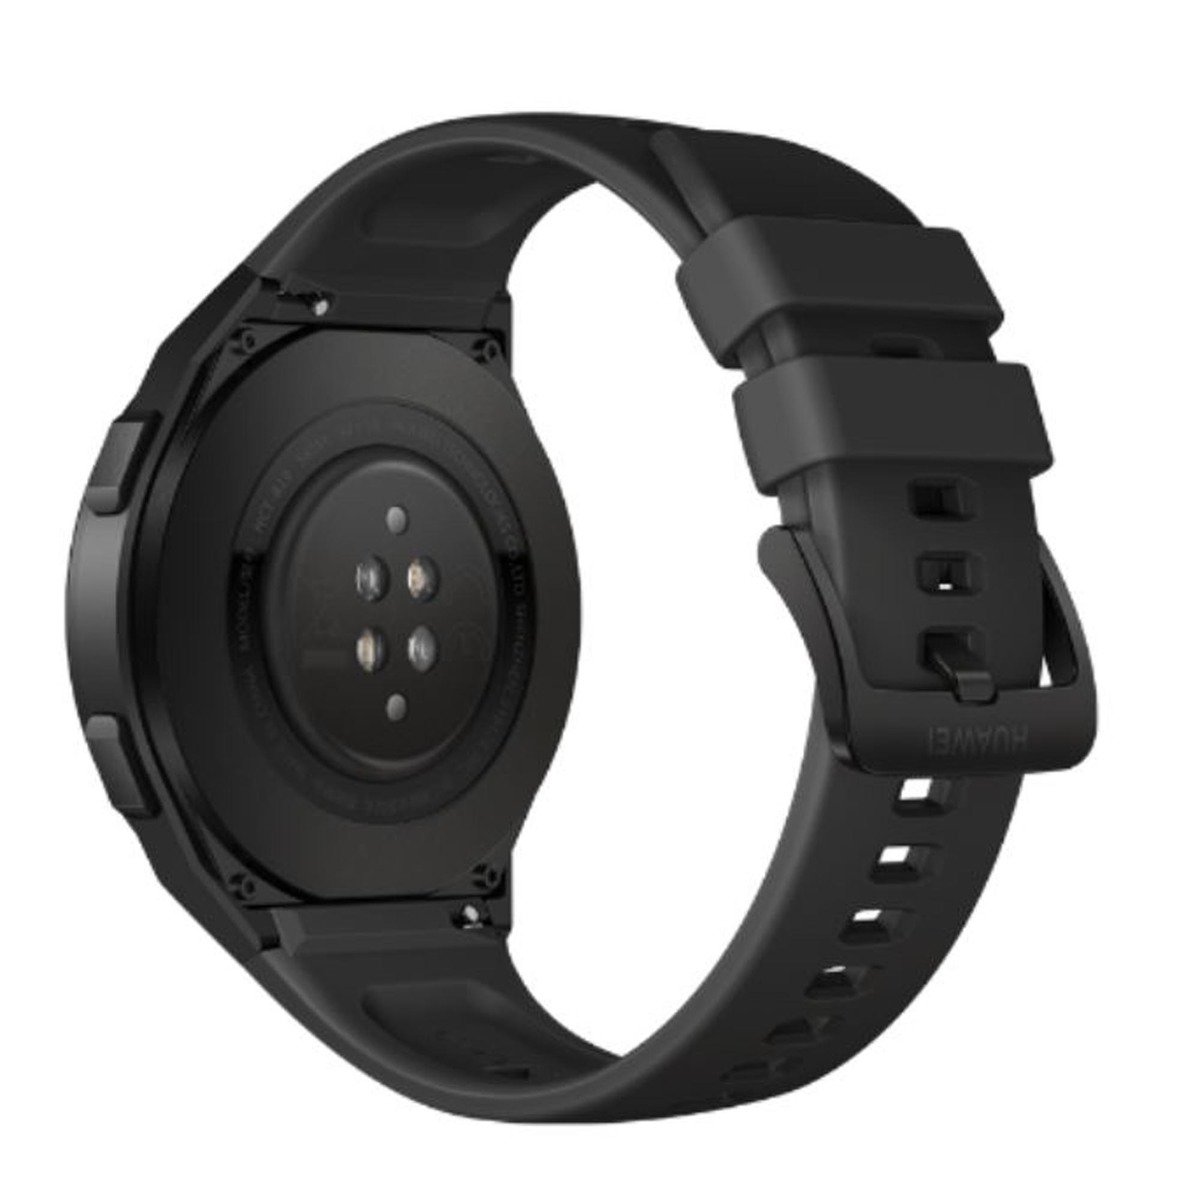 Huawei Smart watch GT2E Hector B19S 46mm Graphite black